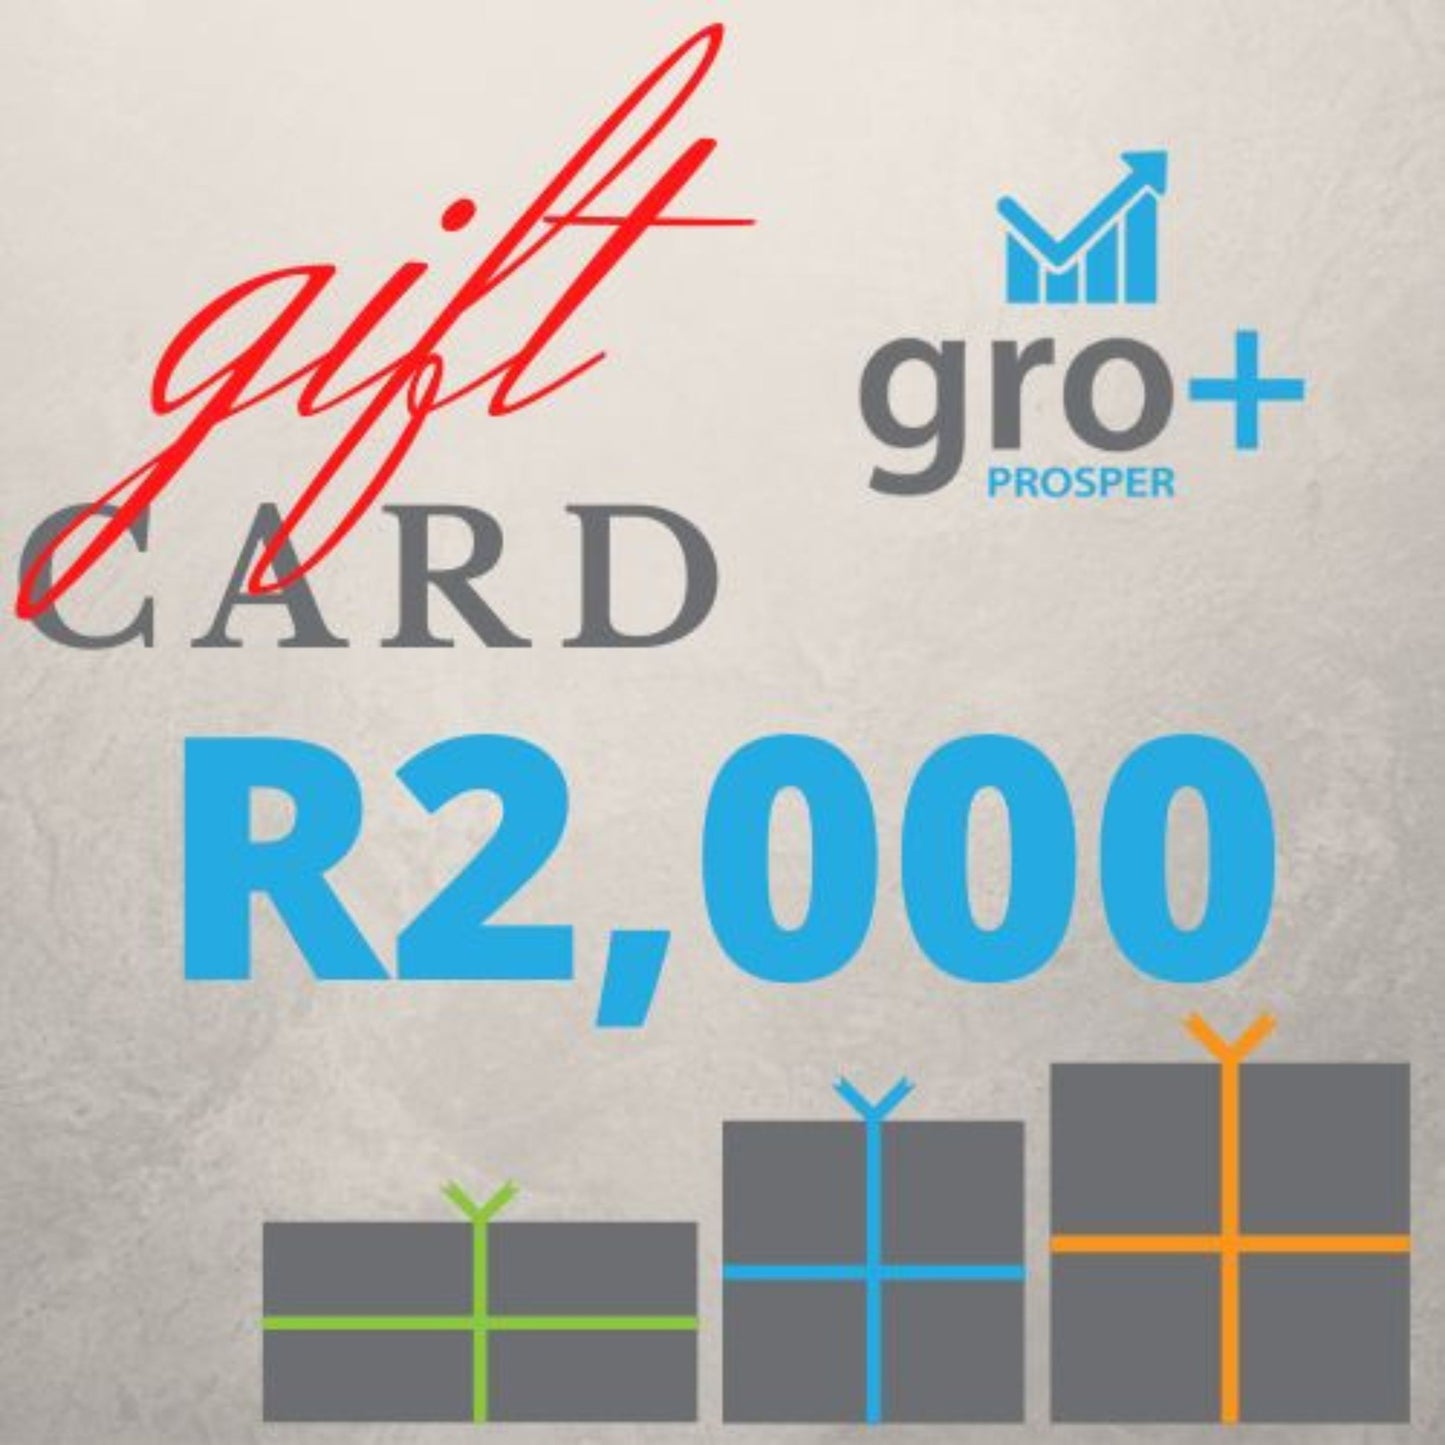 gro + R2000 Gift Card